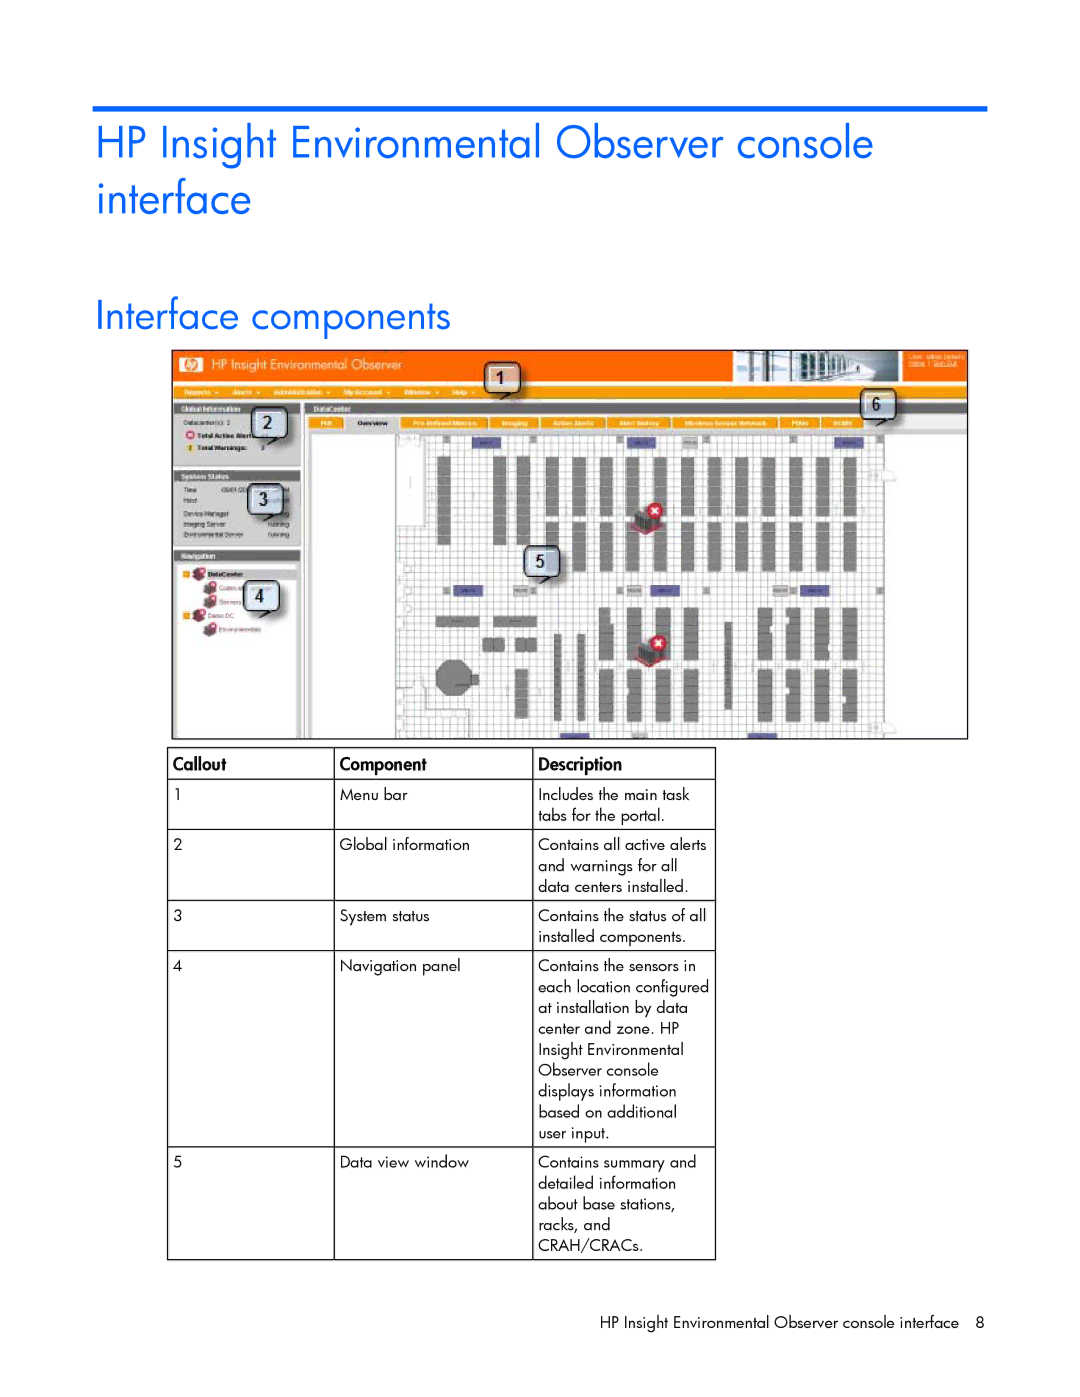 HP Data Center EnvIronmental Edge manual Interface components, Callout Component Description 